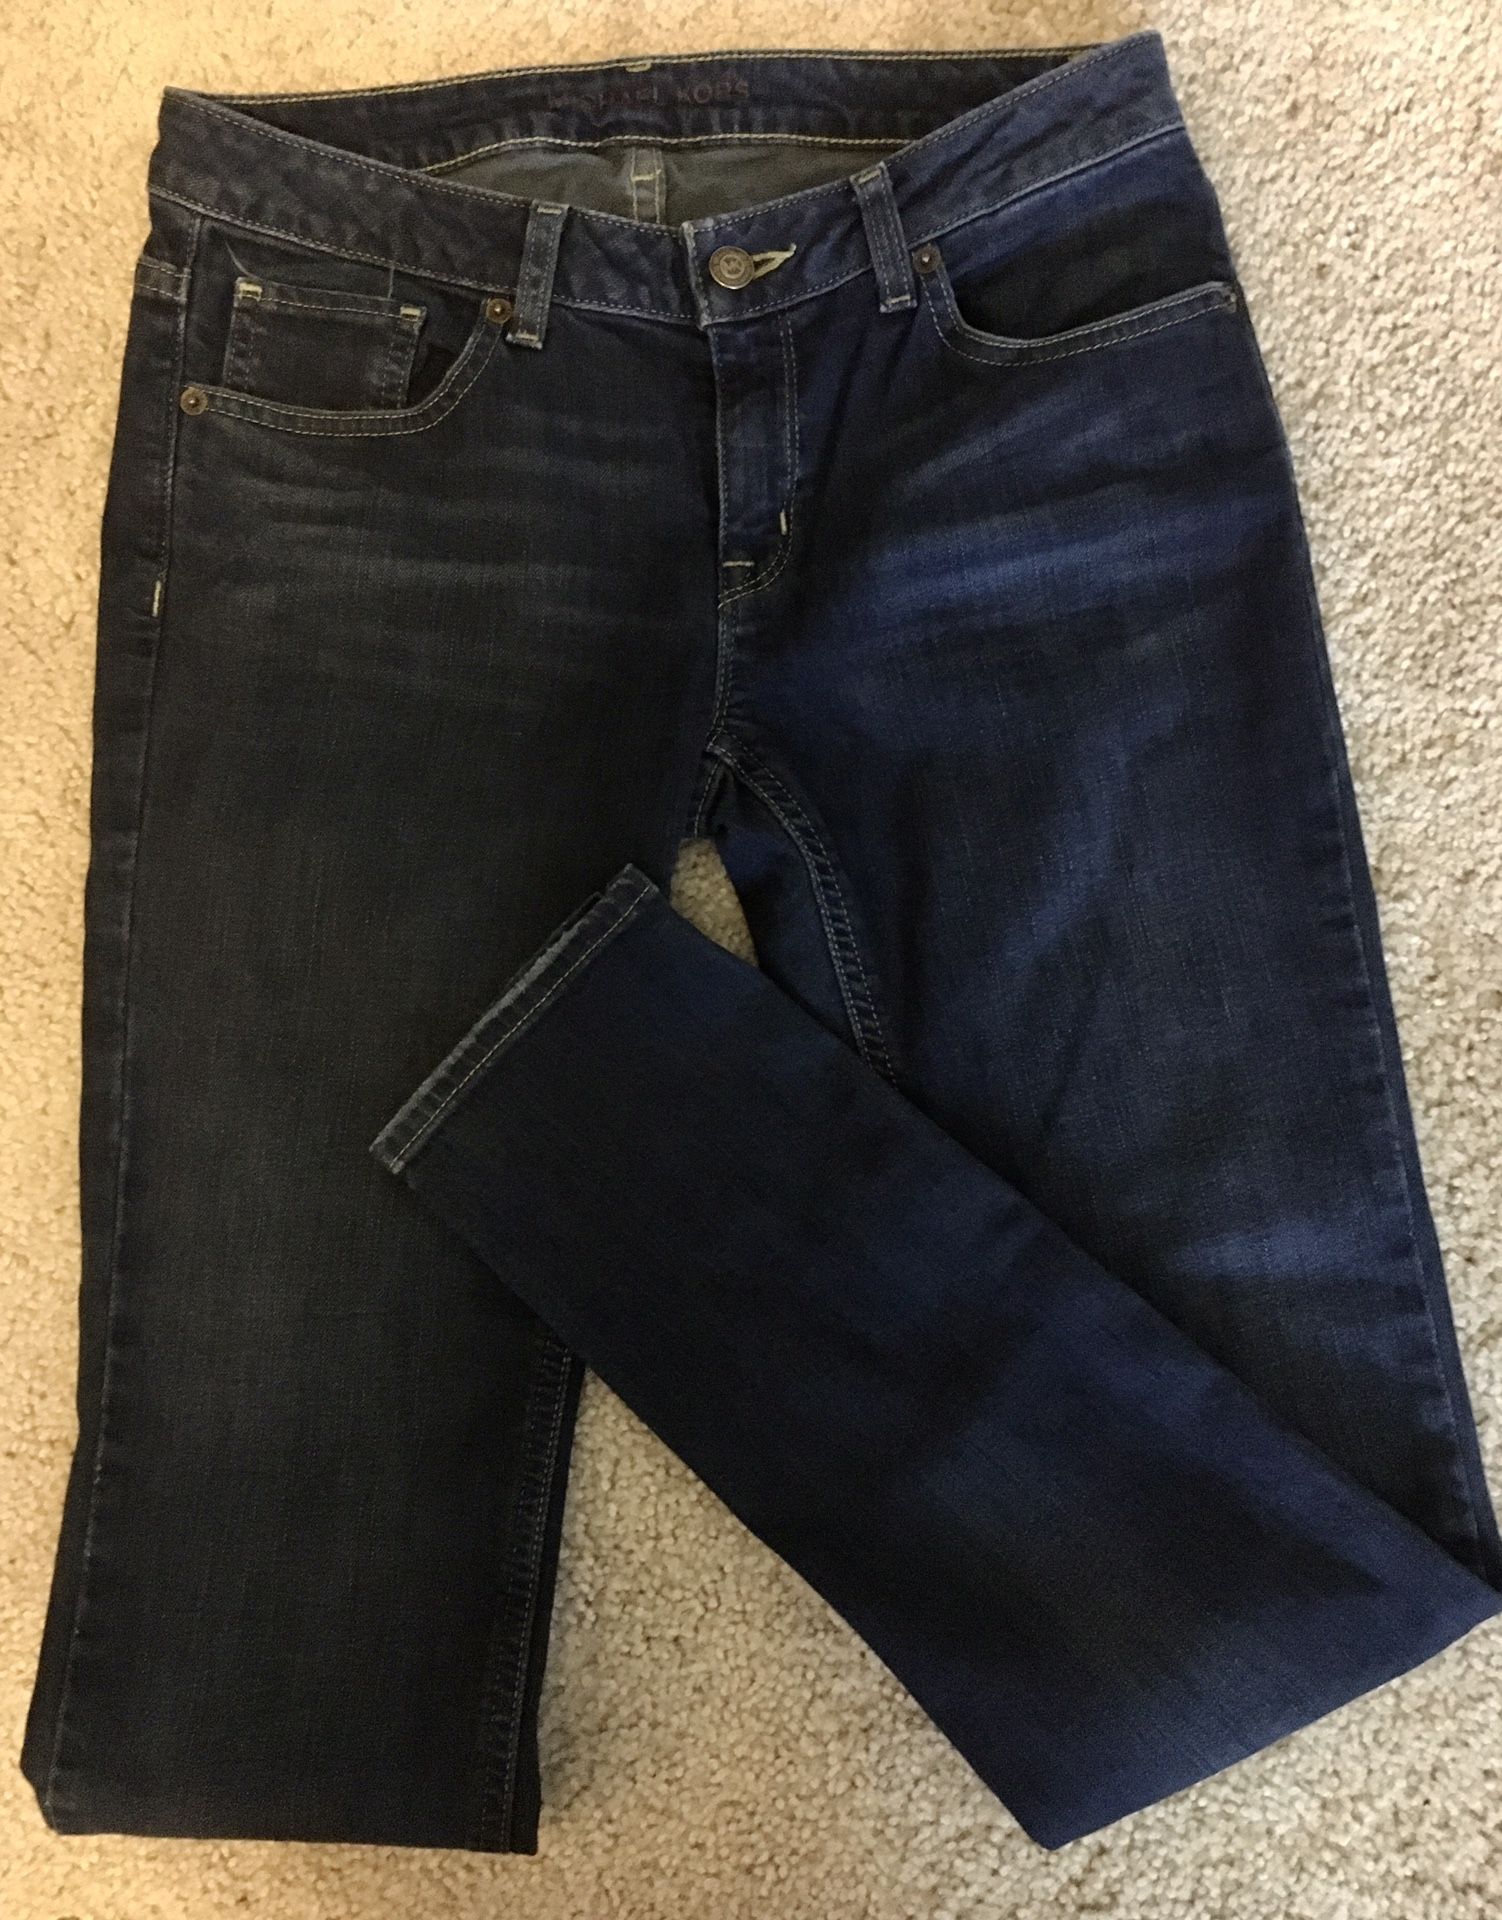 Michael Kors skinny jeans size 2, like new